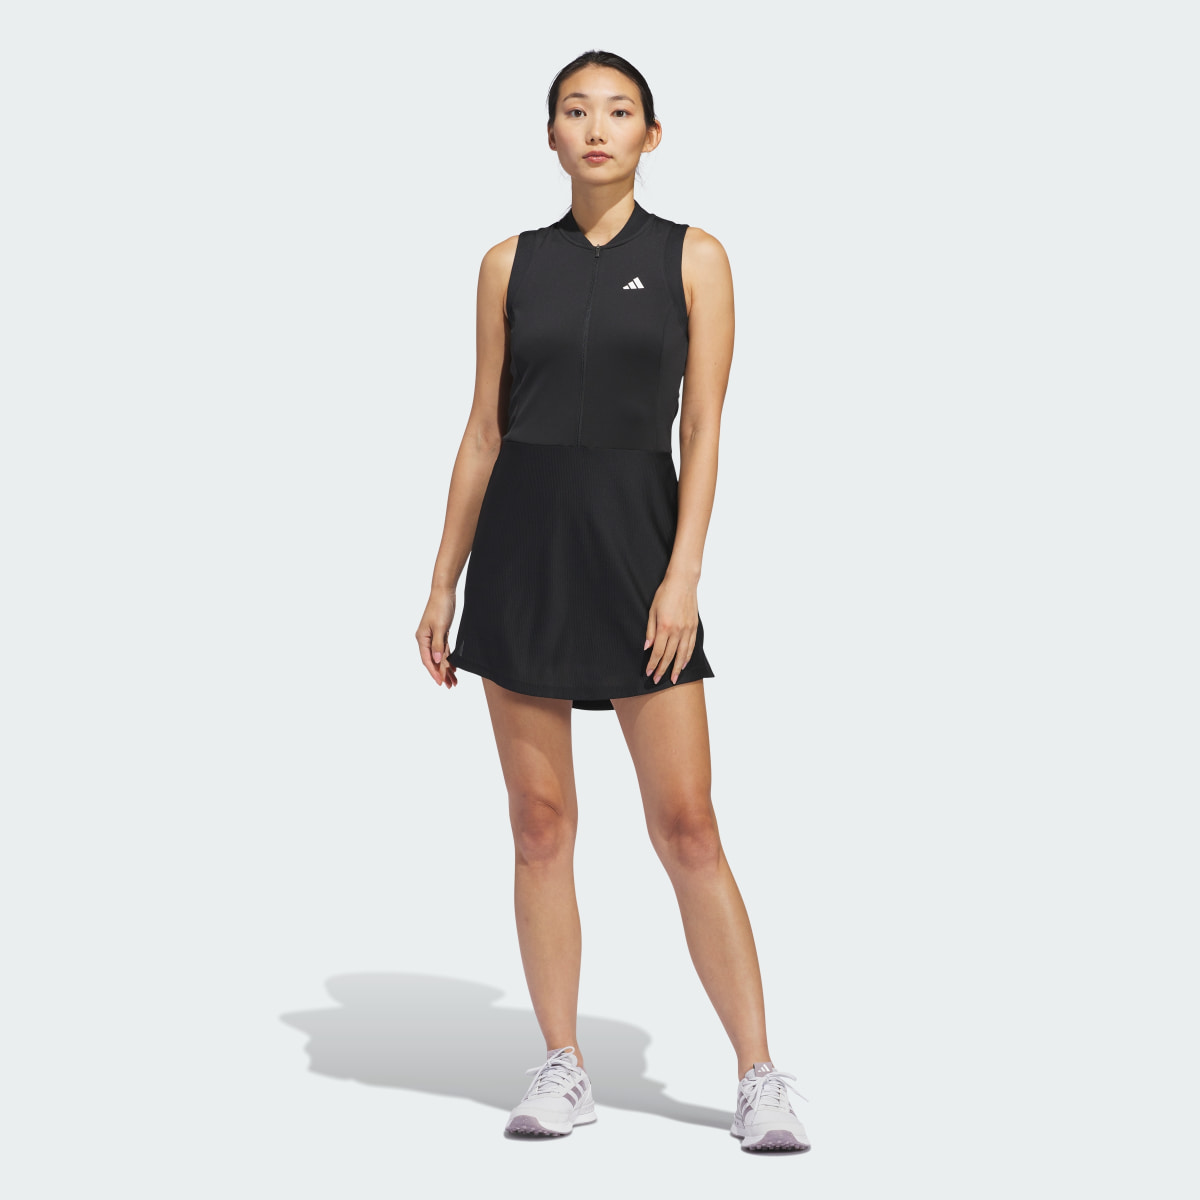 Adidas Women's Ultimate365 Sleeveless Dress. 8